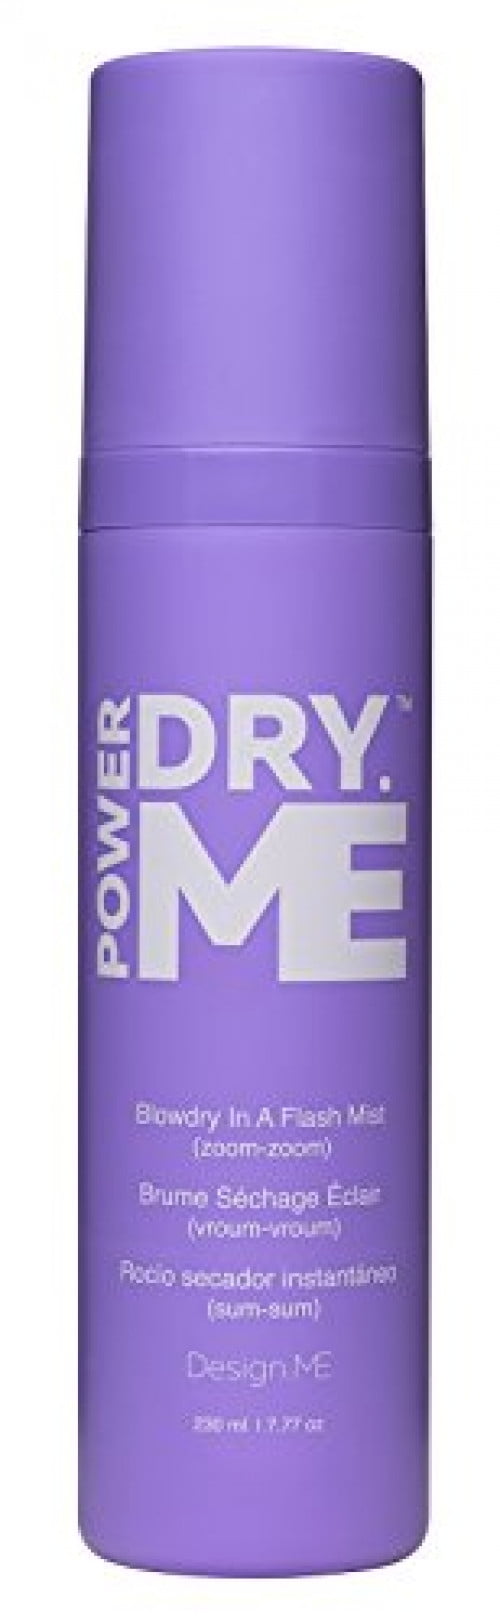 Design Me Dry Me Powder Blowdry In A Flash Mist - 7.77 oz bottle